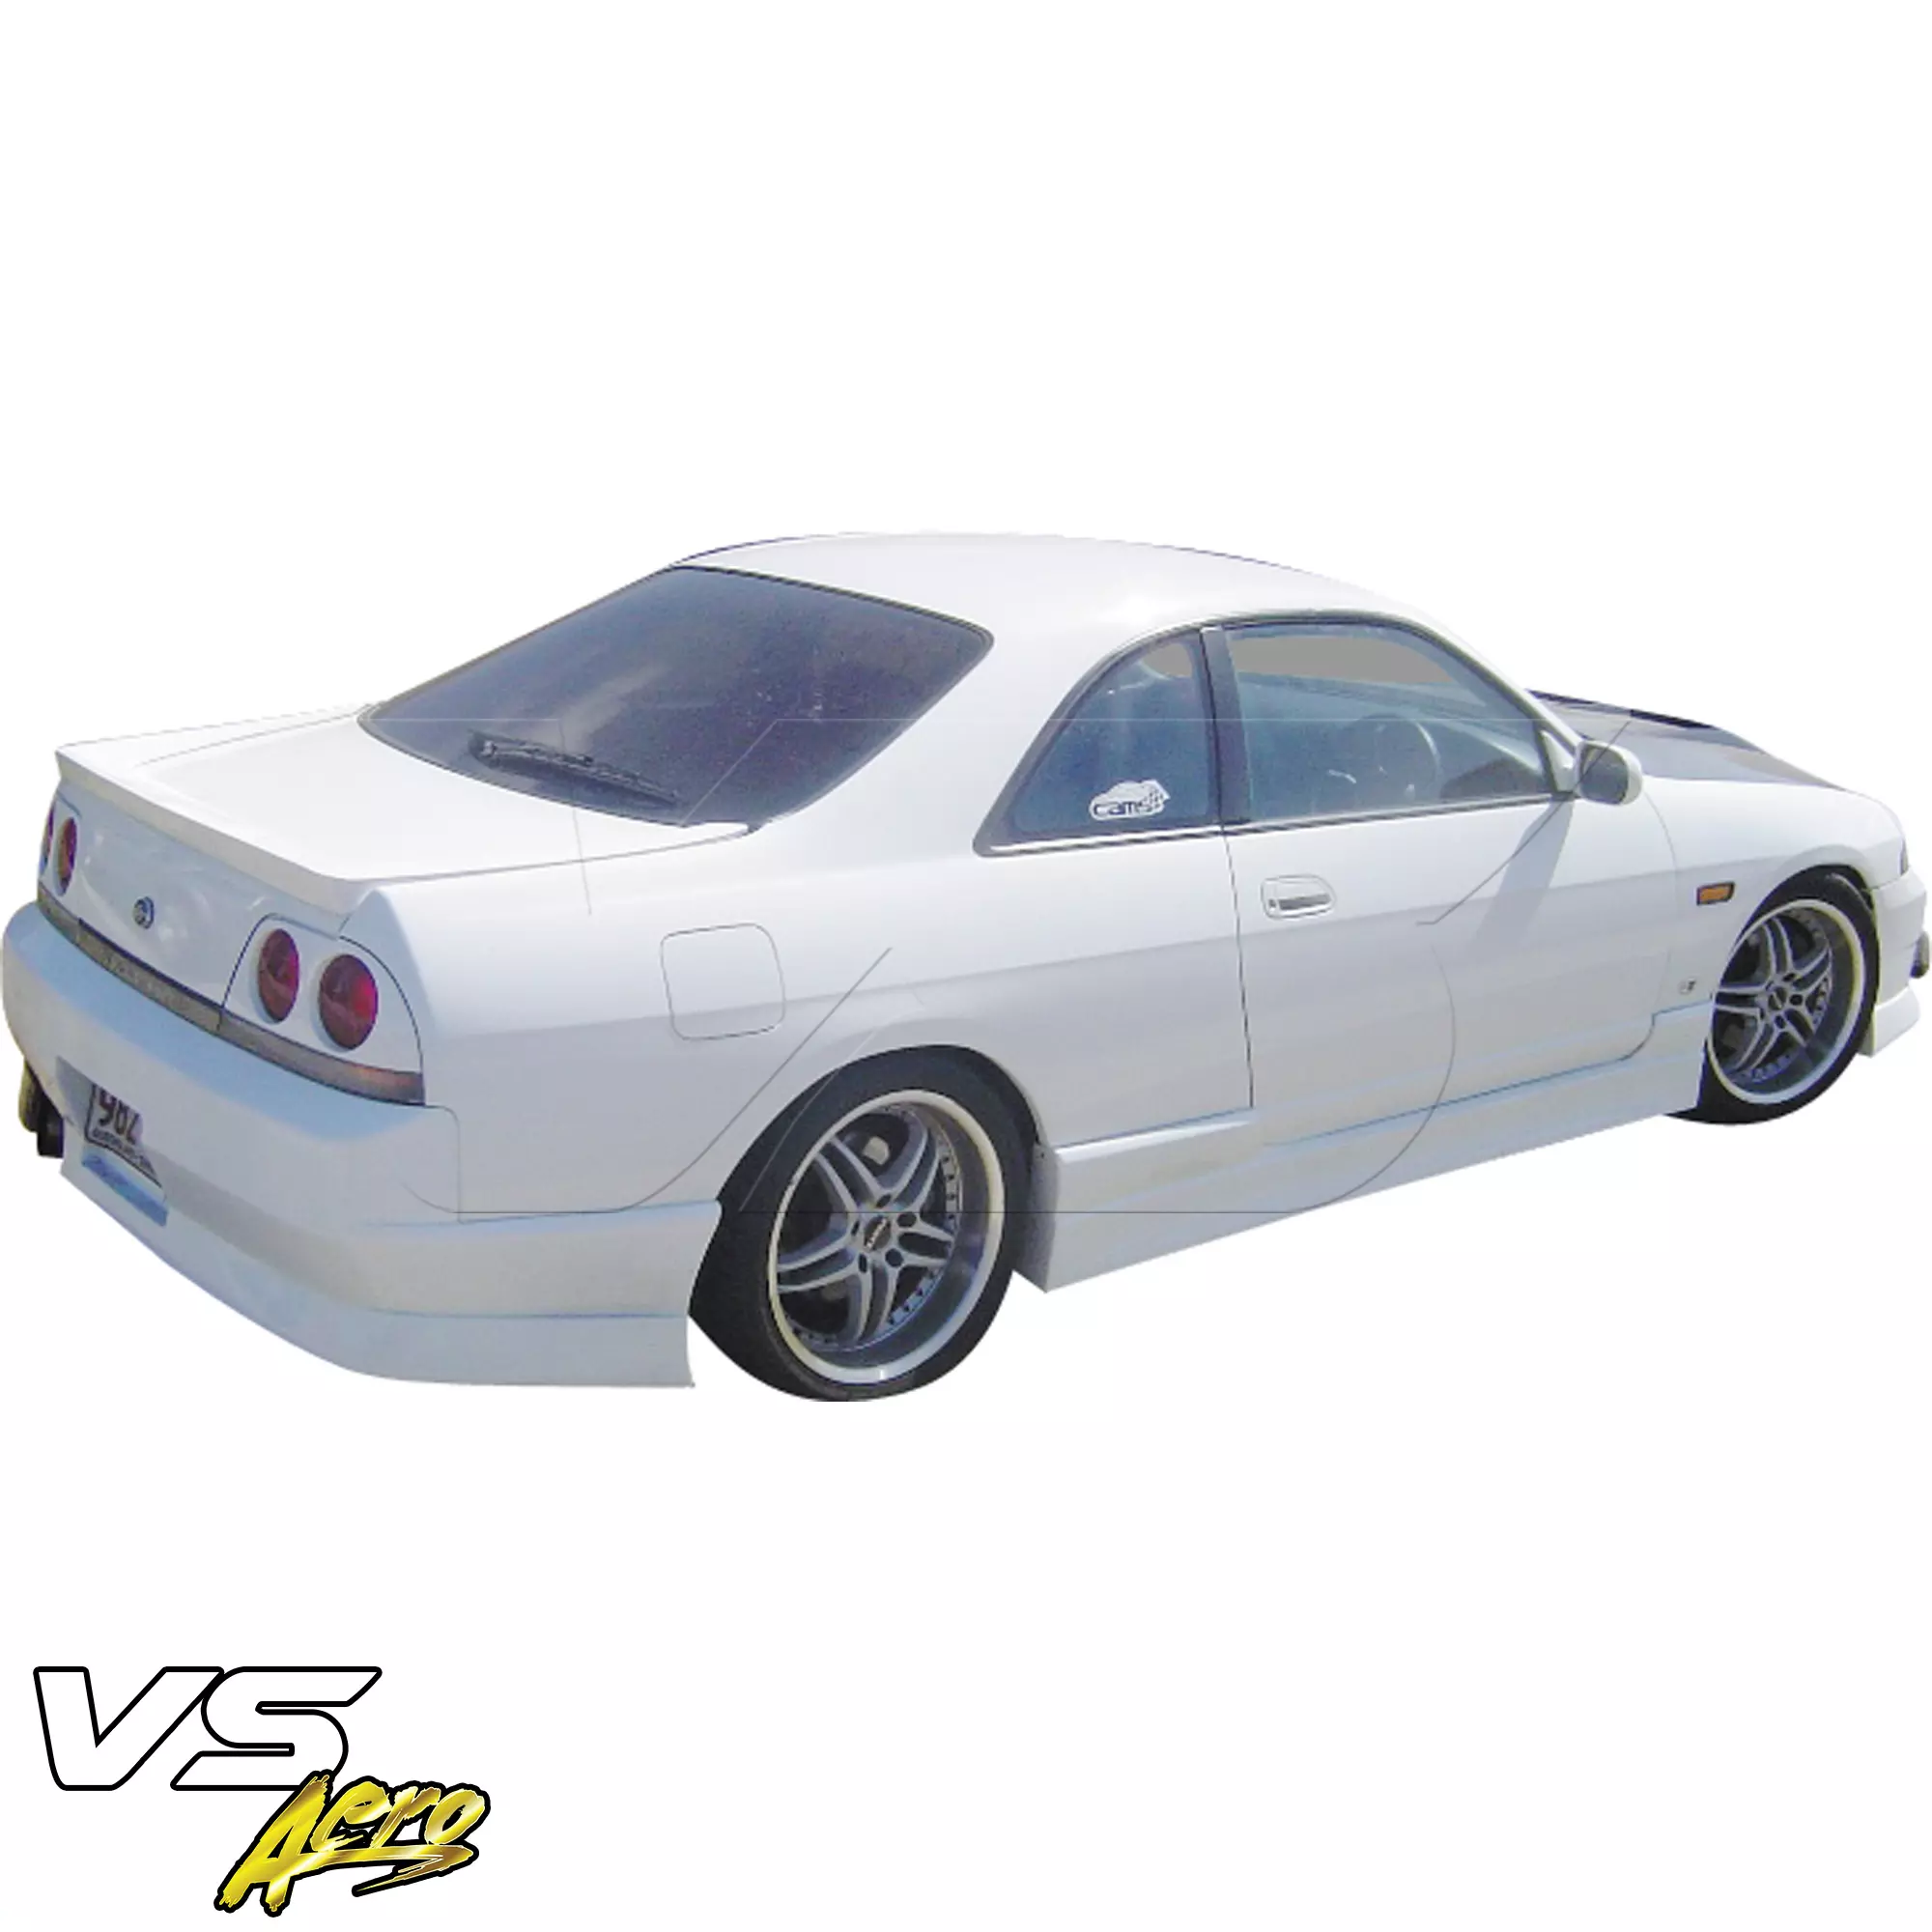 VSaero FRP MSPO v2 Body Kit 4pc > Nissan Skyline R33 GTS 1995-1998 > 2dr Coupe - Image 28